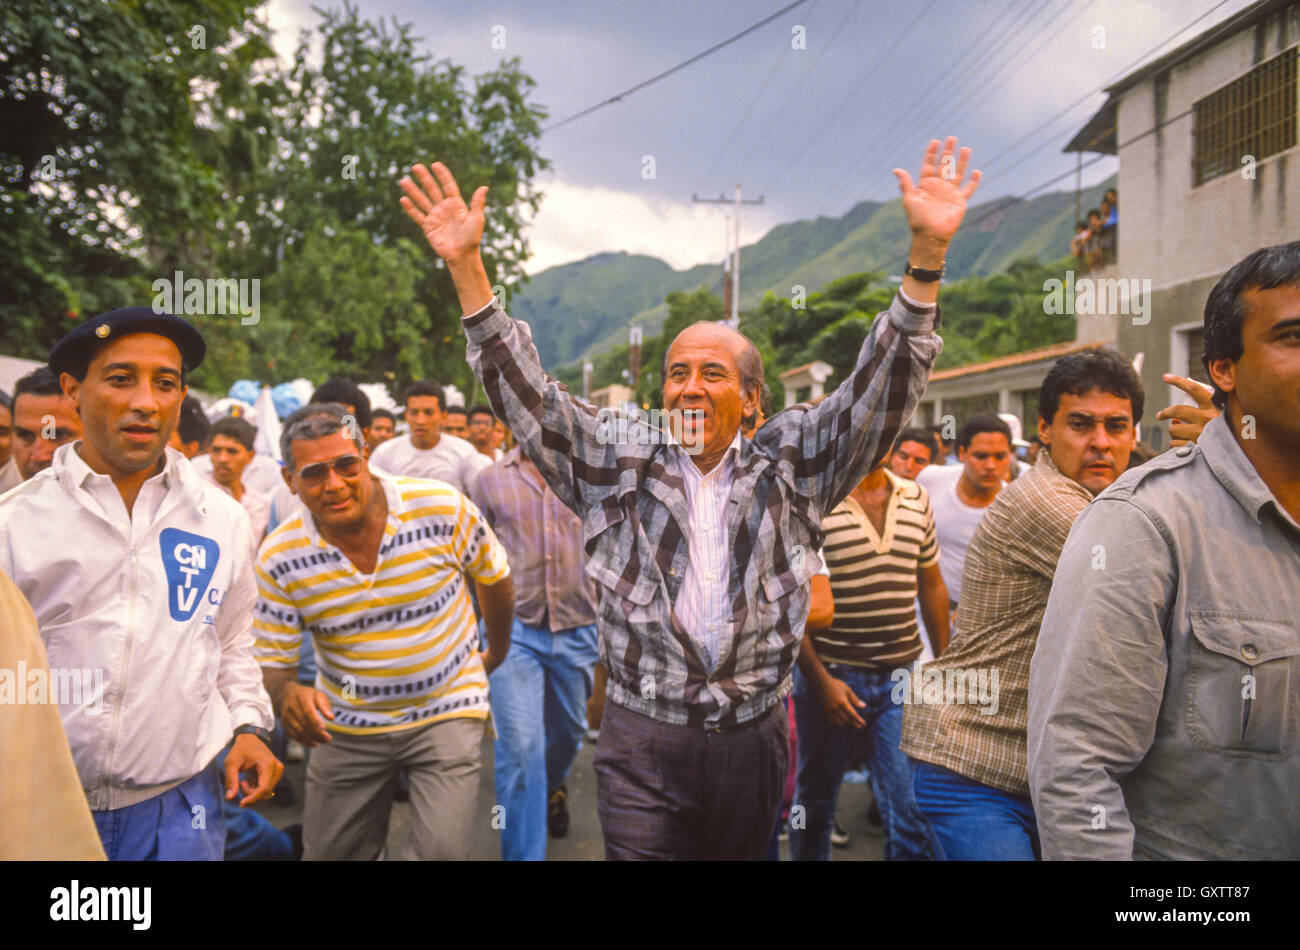 MARACAY, VENEZUELA - Presidential candidate Carlos Andres Perez campaigning. October 1988 Stock Photo